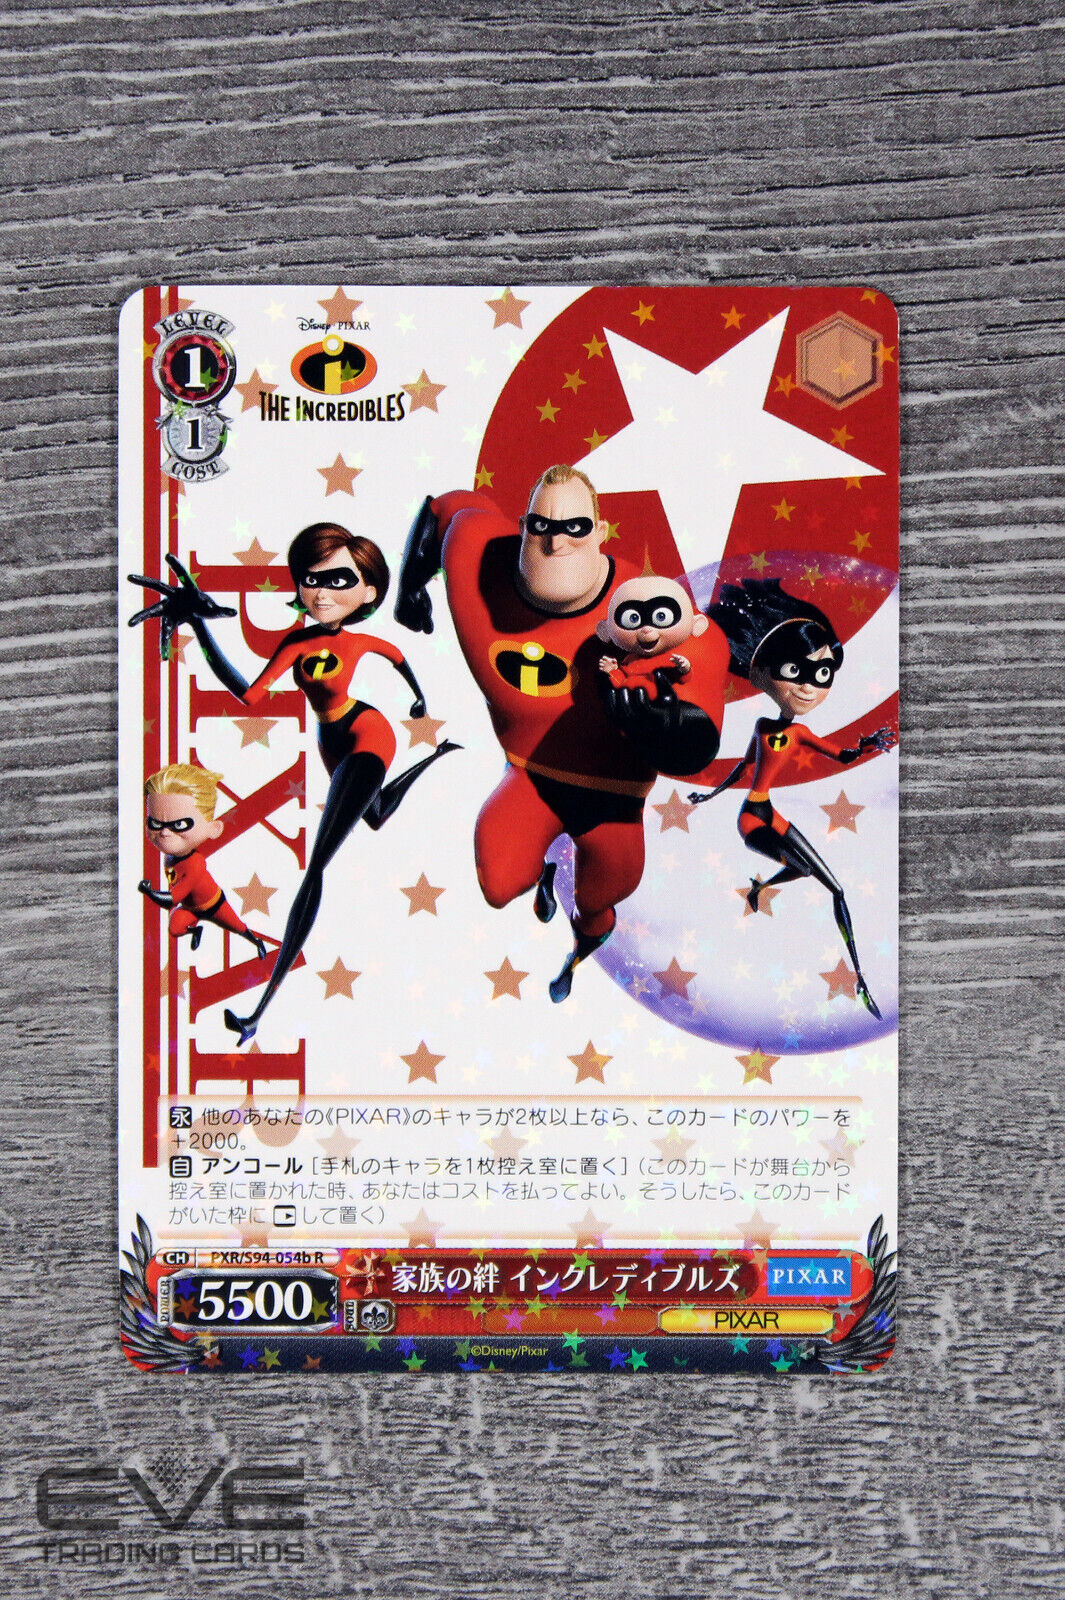 Weiss Schwarz Japanese Pixar Card PXR/S94-054b R "The Incredibles" NM/M